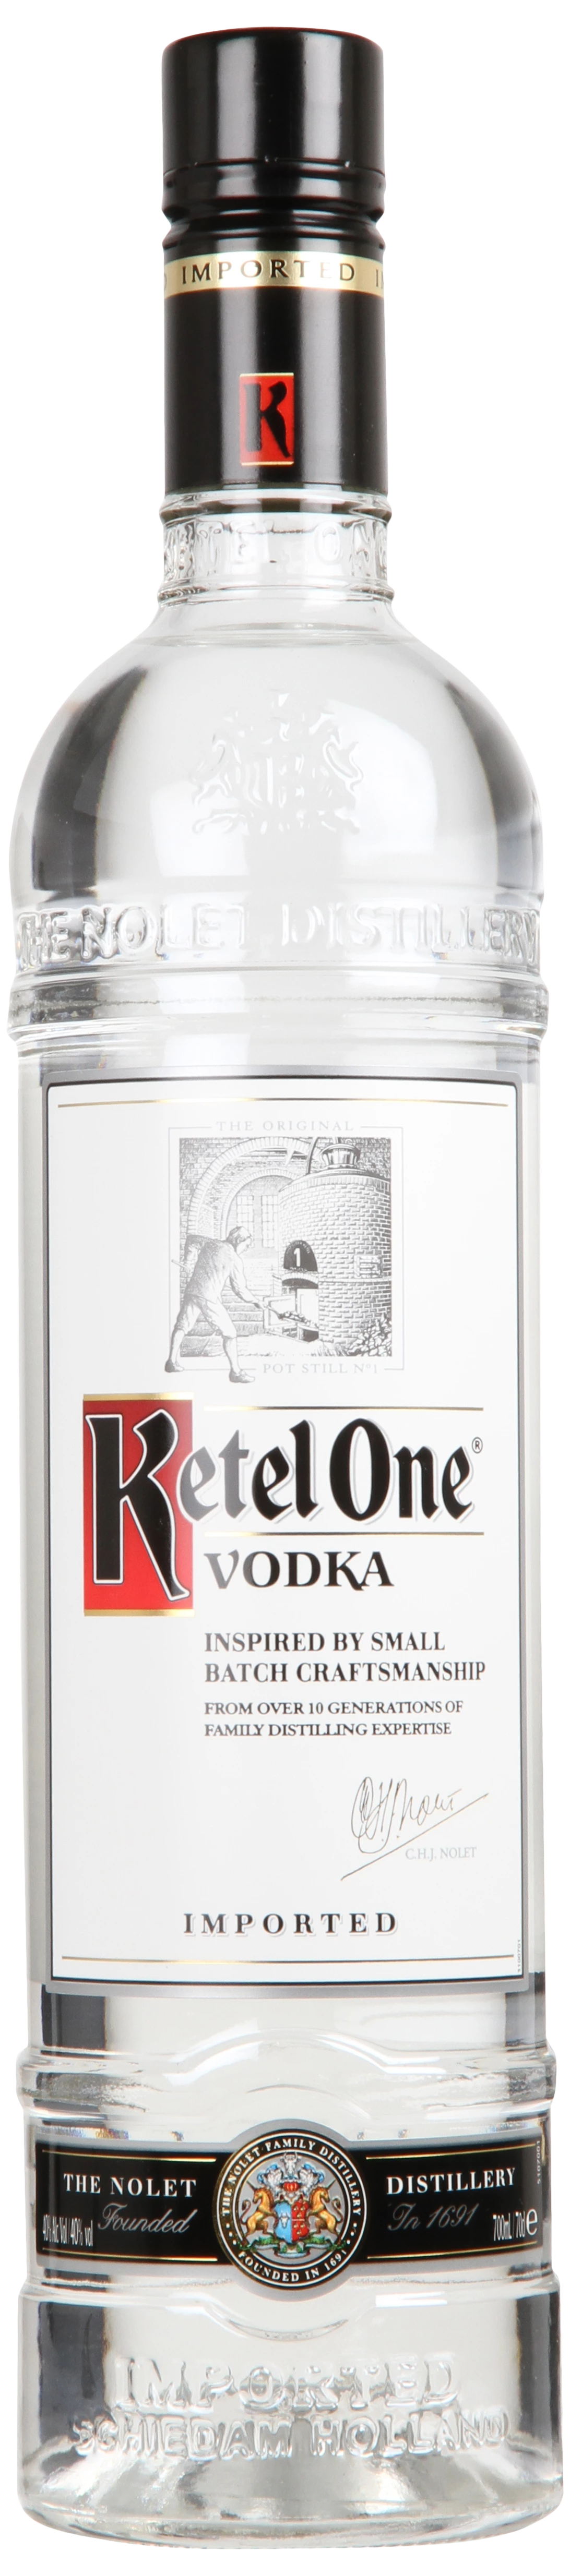 Løgismose spiritus Vodka Ketel One Holland 40% 70cl - 128339